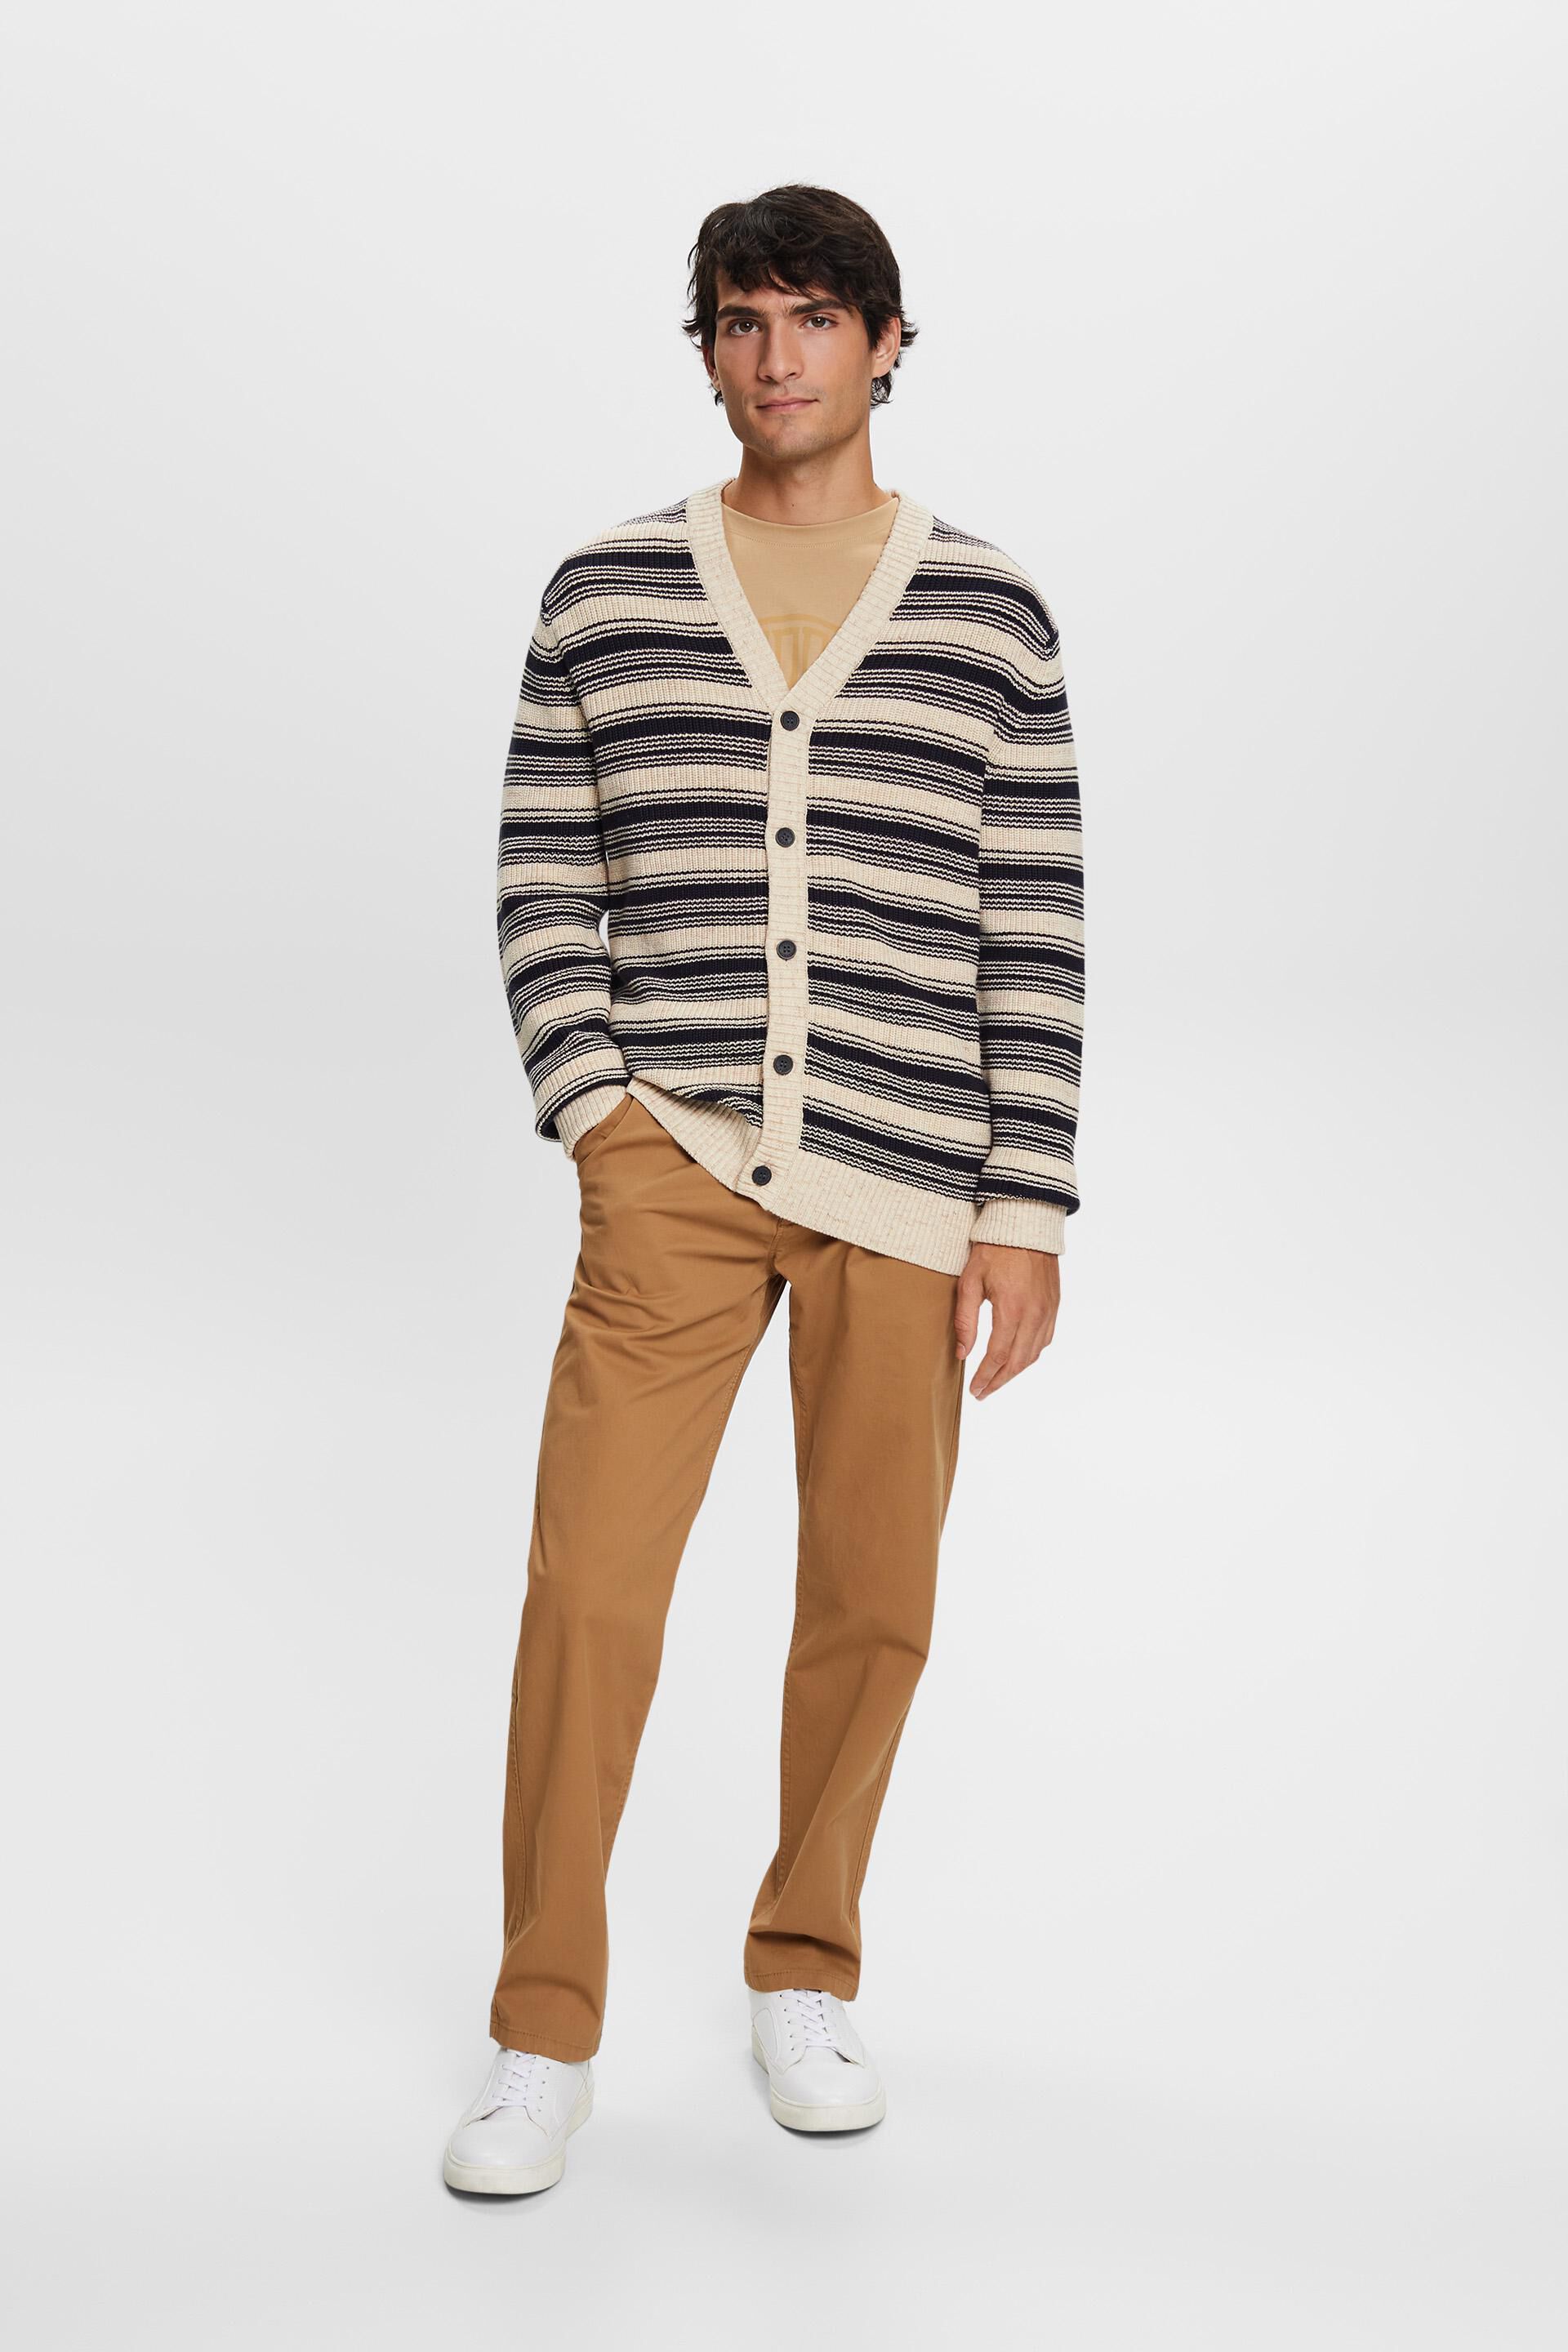 Esprit 100% cardigan, Striped V-neck cotton